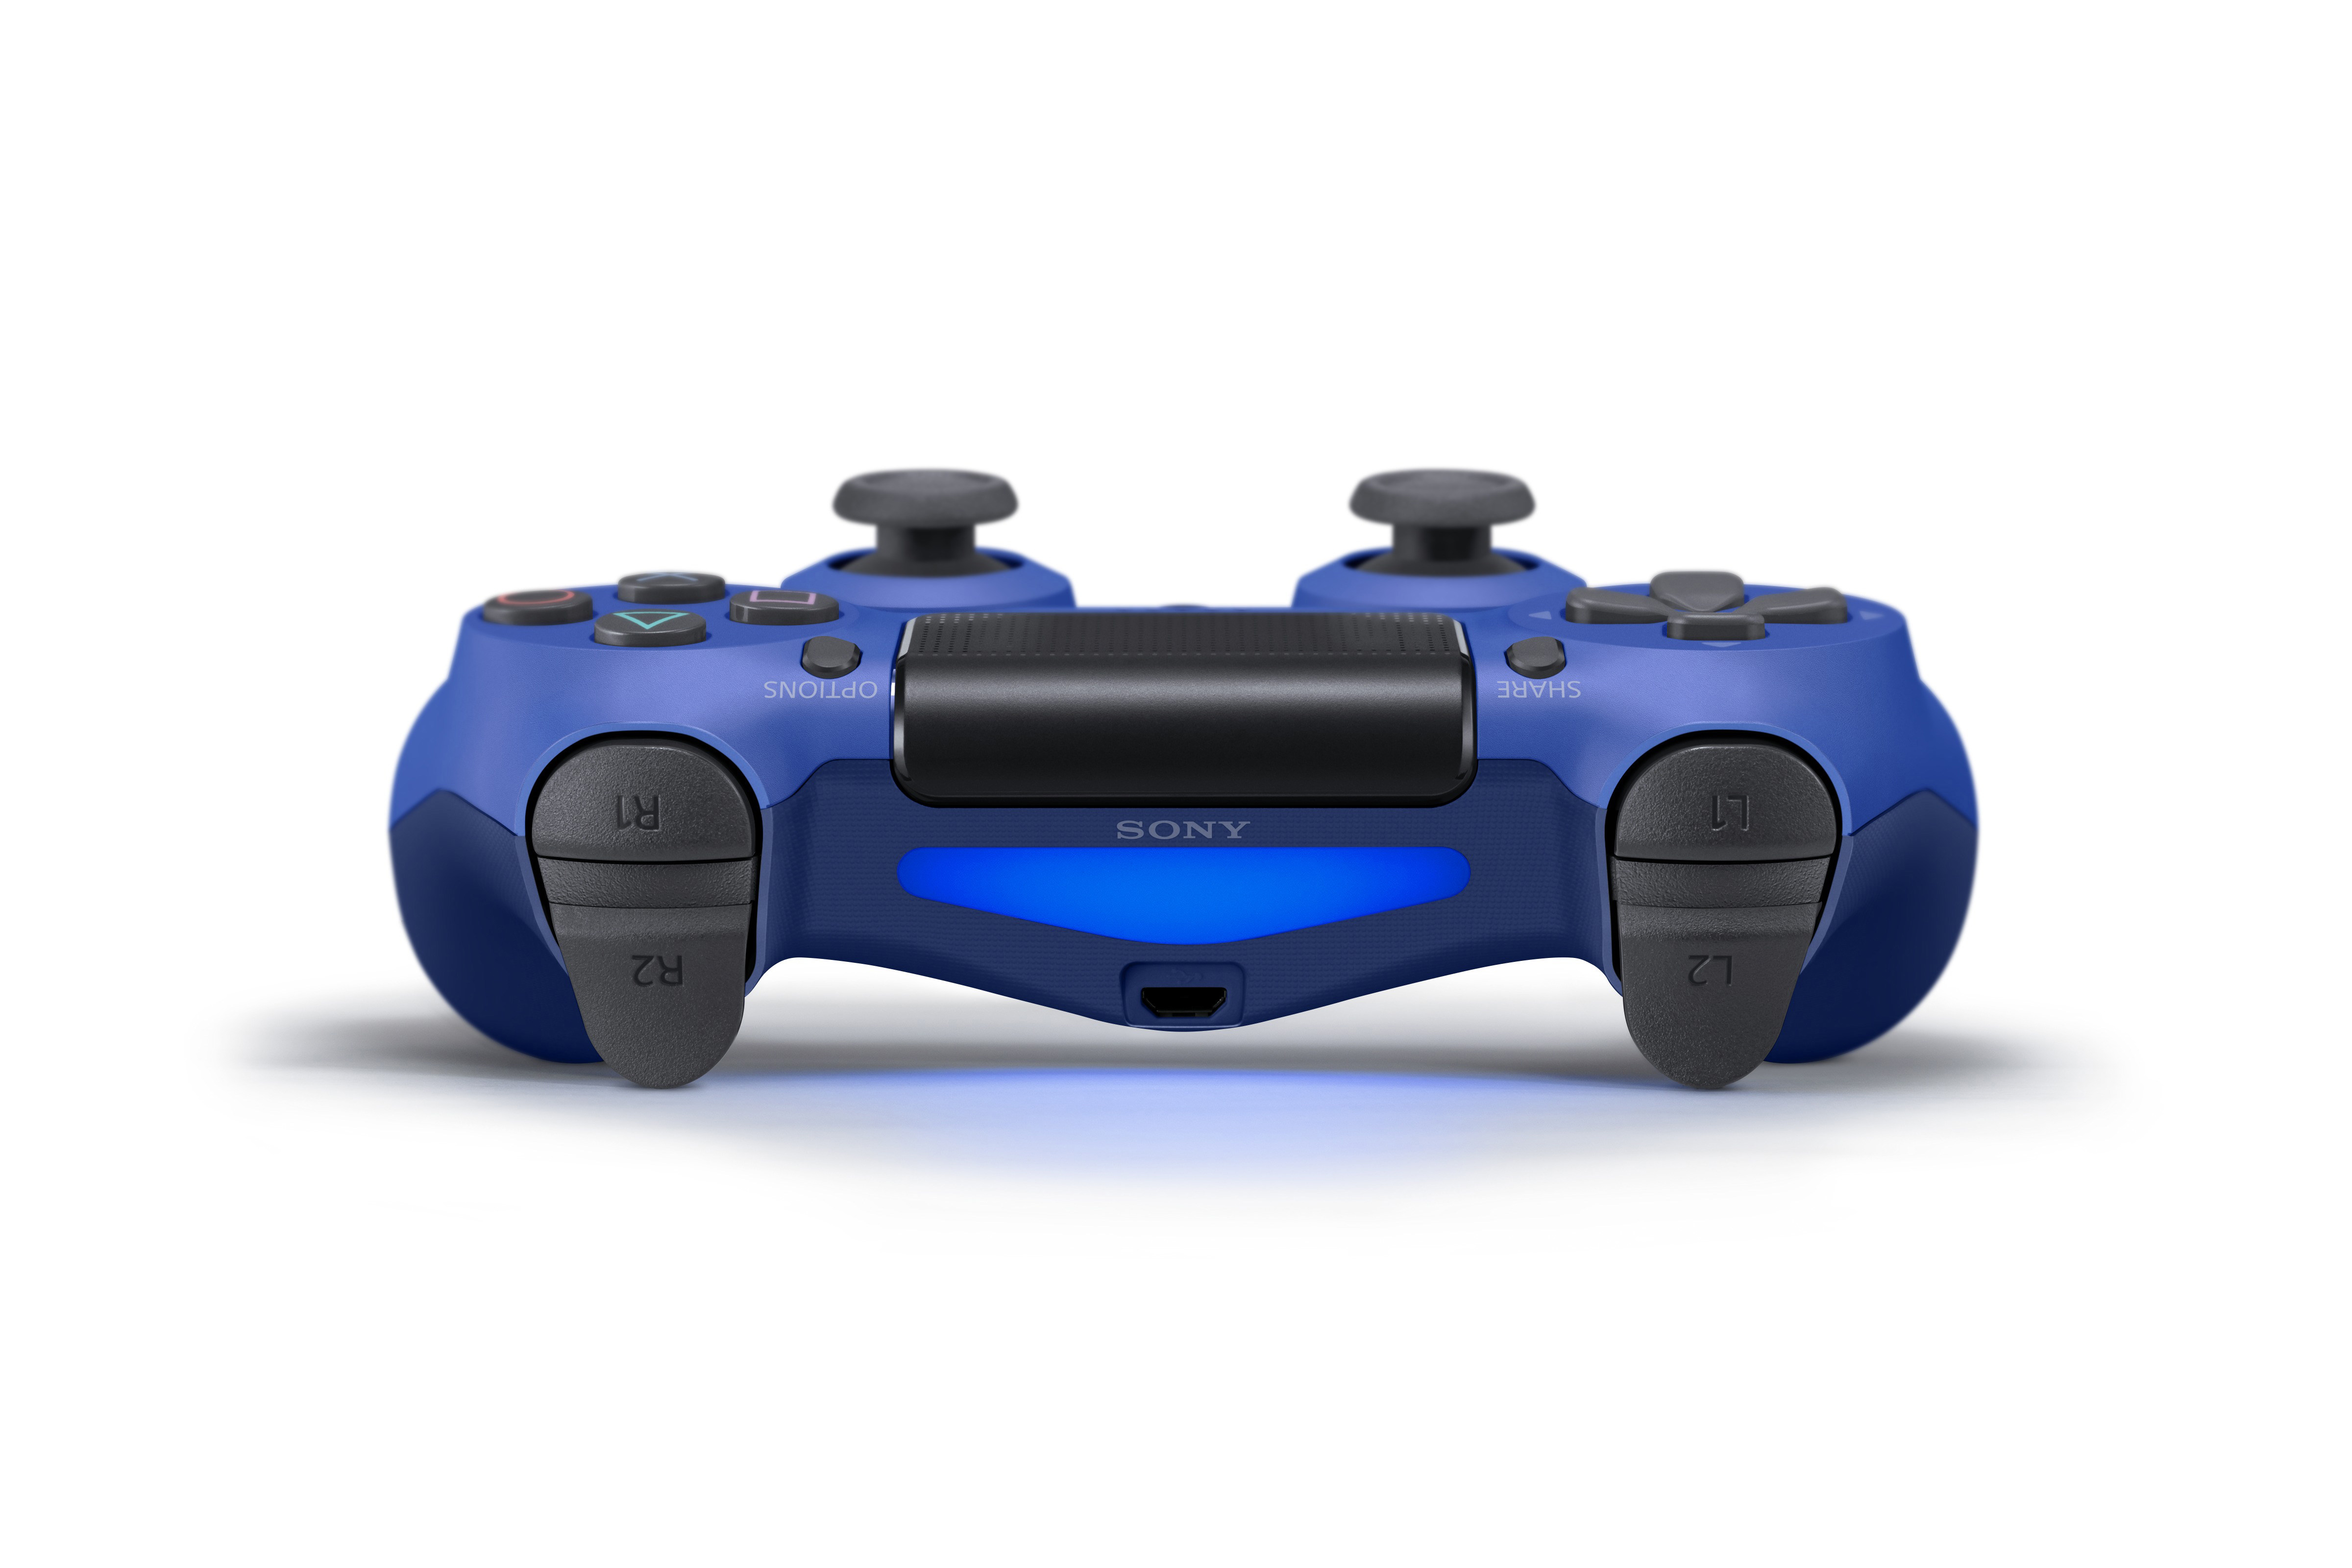 PlayStation Controller für Wireless SONY 4 Blue Wave Redesigned Dualshock 4 4 PlayStation